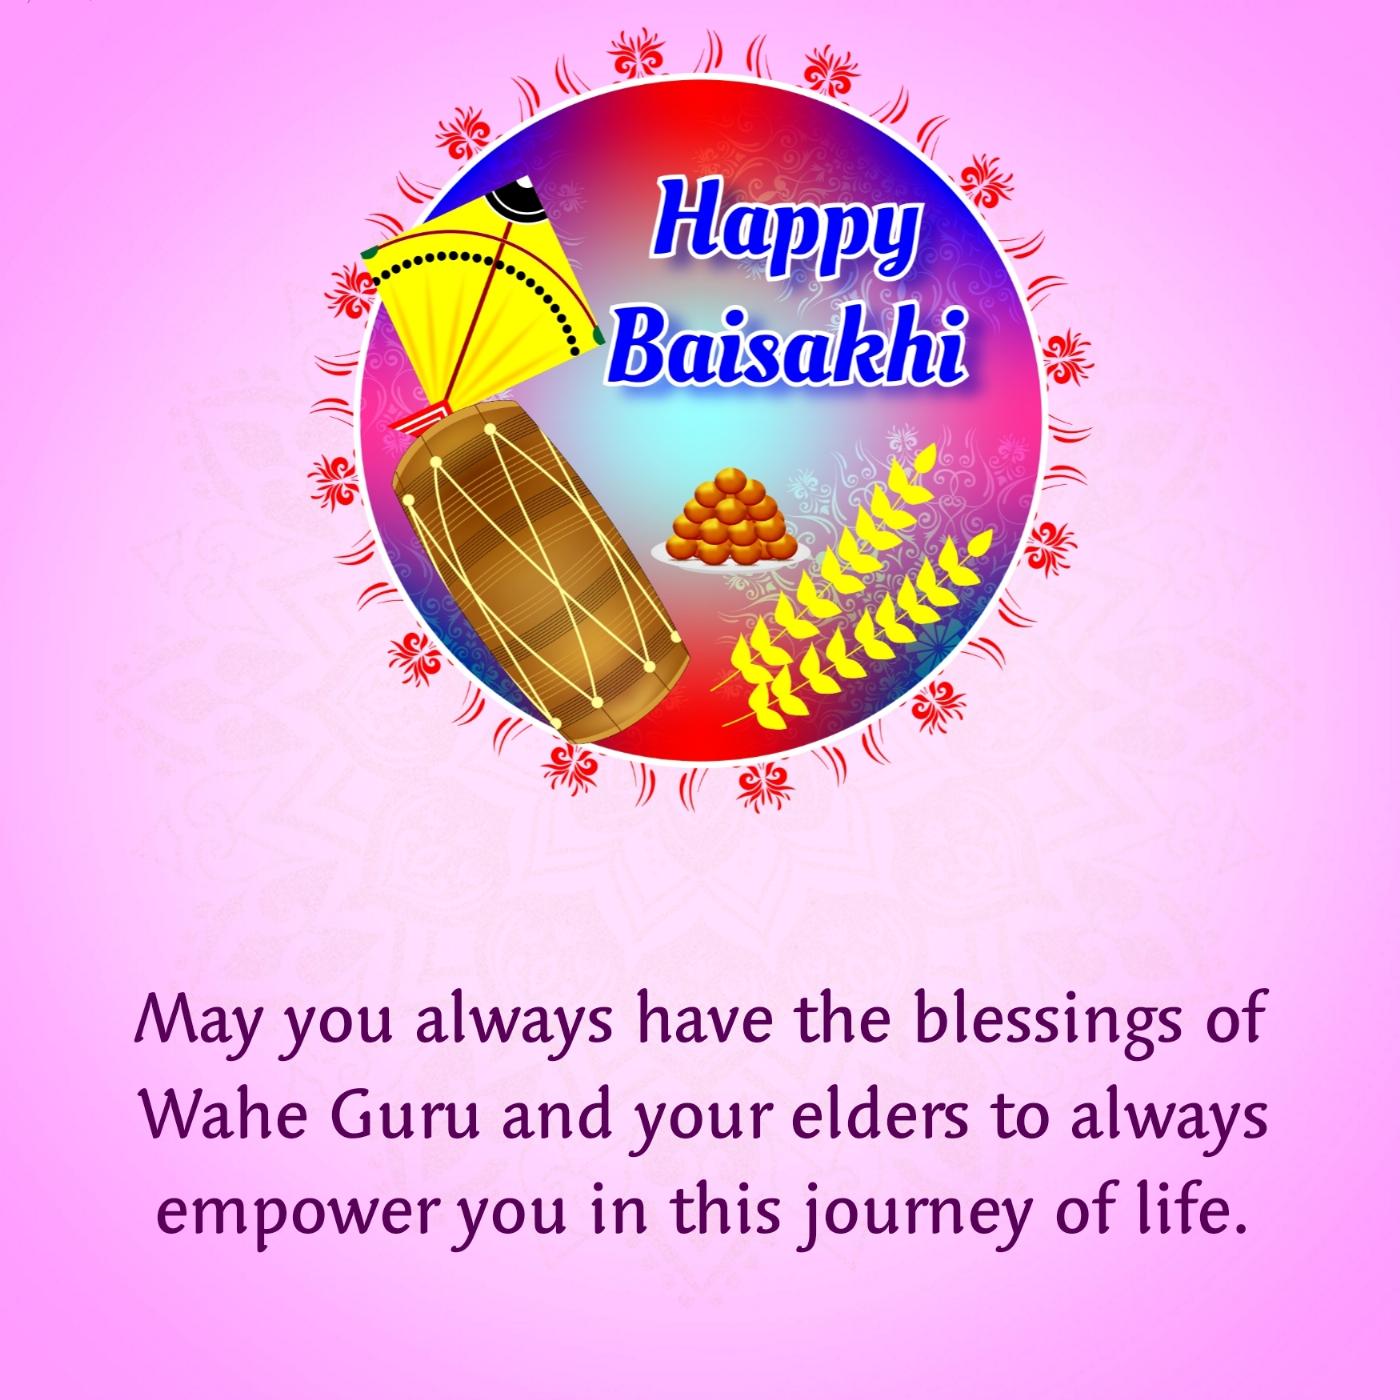 May you always have the blessings of Wahe Guru